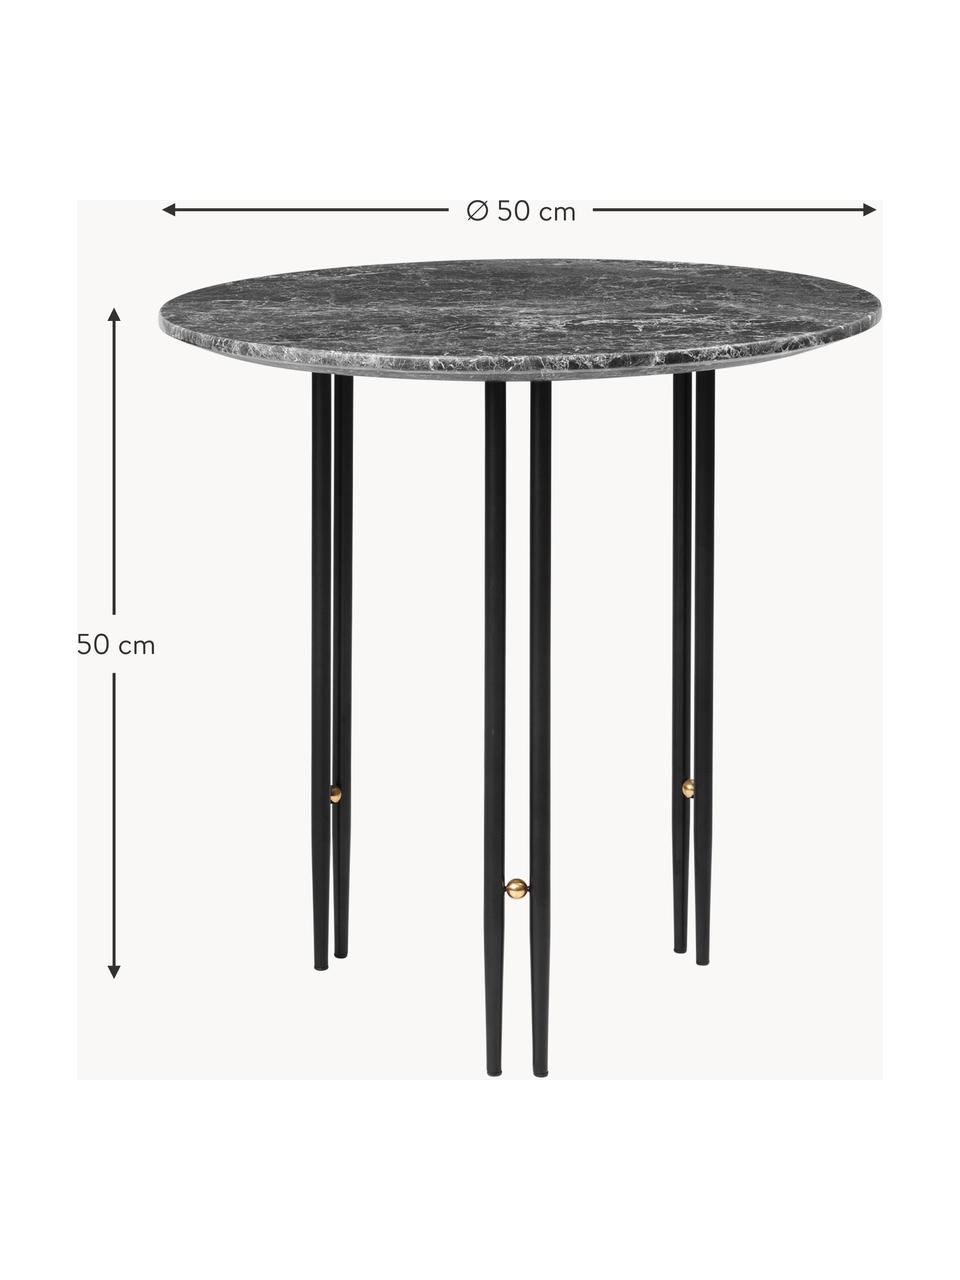 Runder Marmor-Beistelltisch IOI, Tischplatte: Marmor, Gestell: Stahl, lackiert, Dekor: Messing, Dunkelgrau marmoriert, Schwarz, Ø 50 x H 50 cm